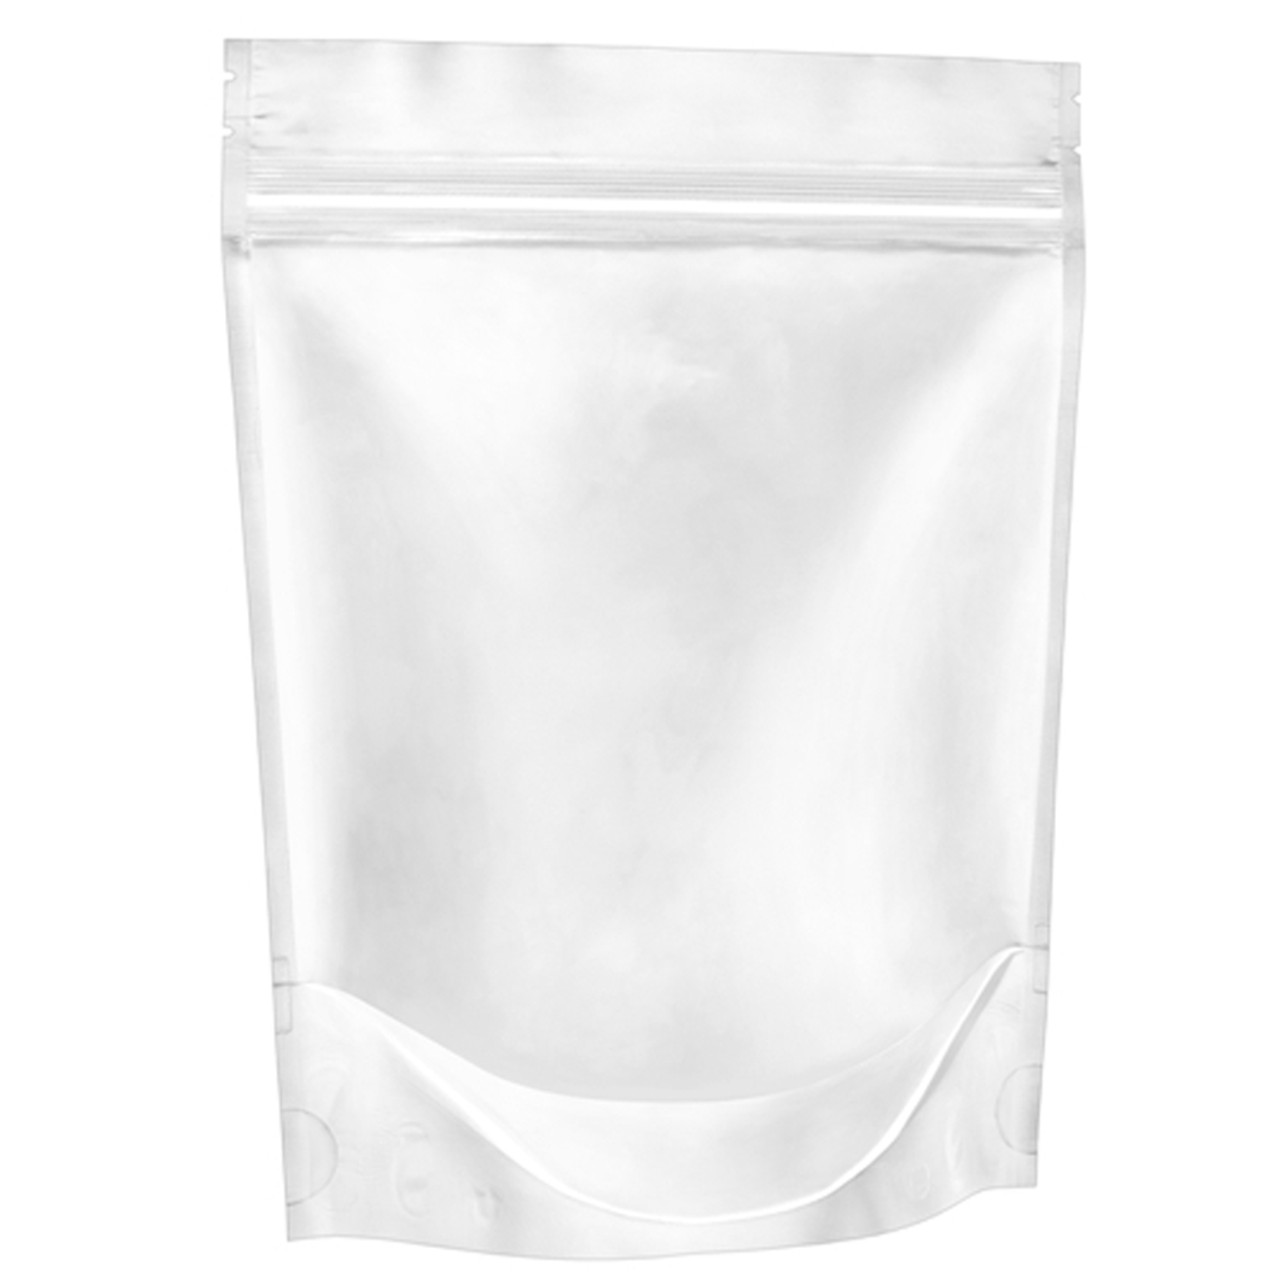 Flexible Heat-Seal Specimen Bags, 4.5 mil SealPAK 500 series, bulk